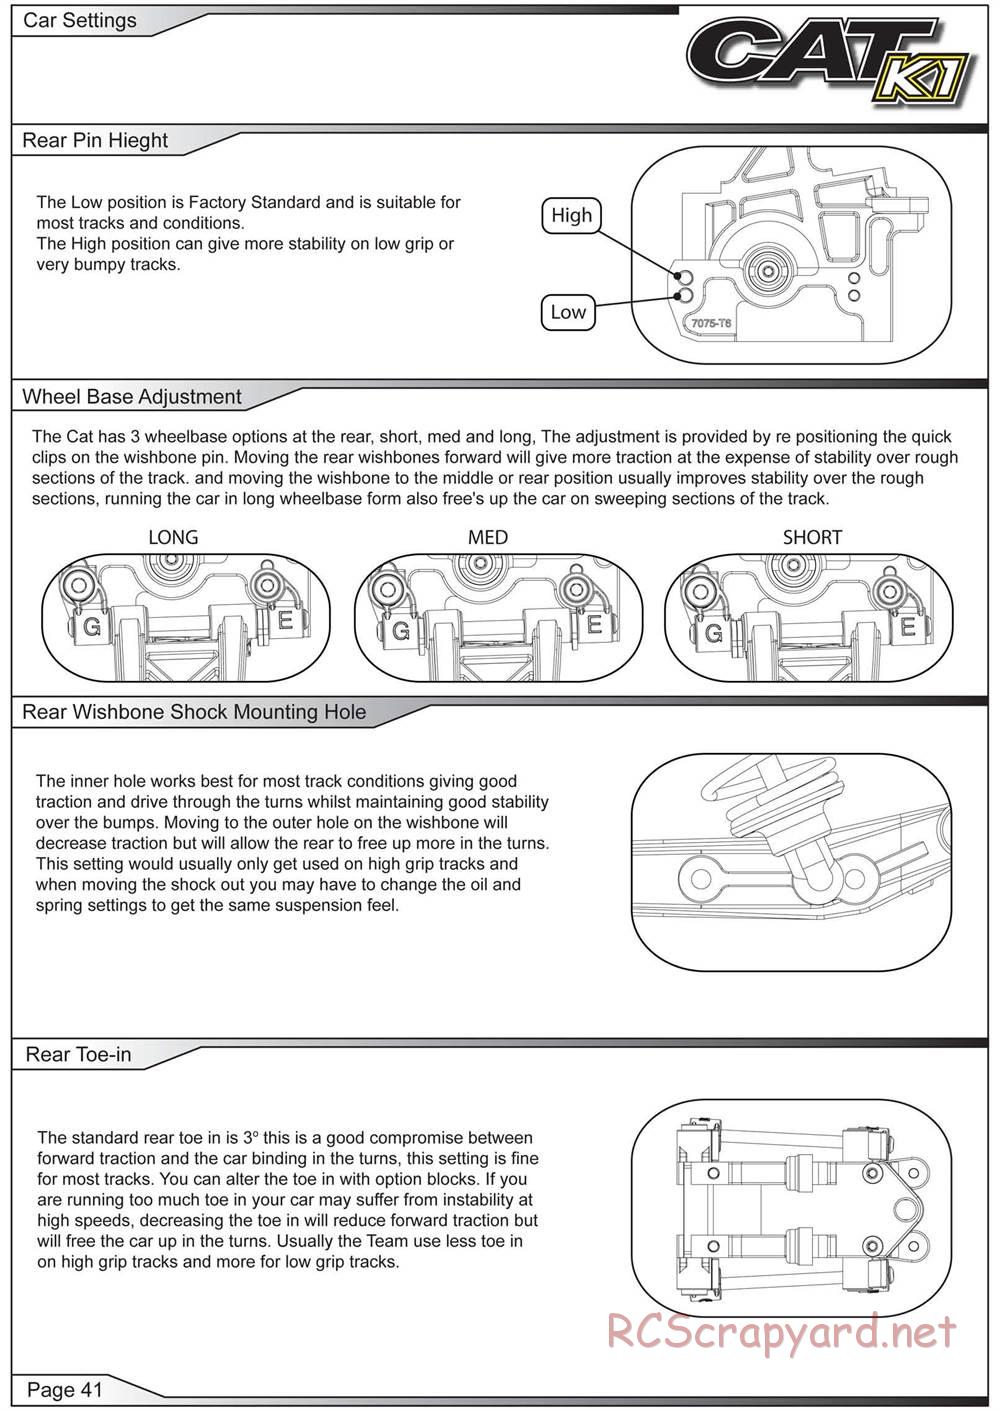 Schumacher - Cat K1 - Manual - Page 42